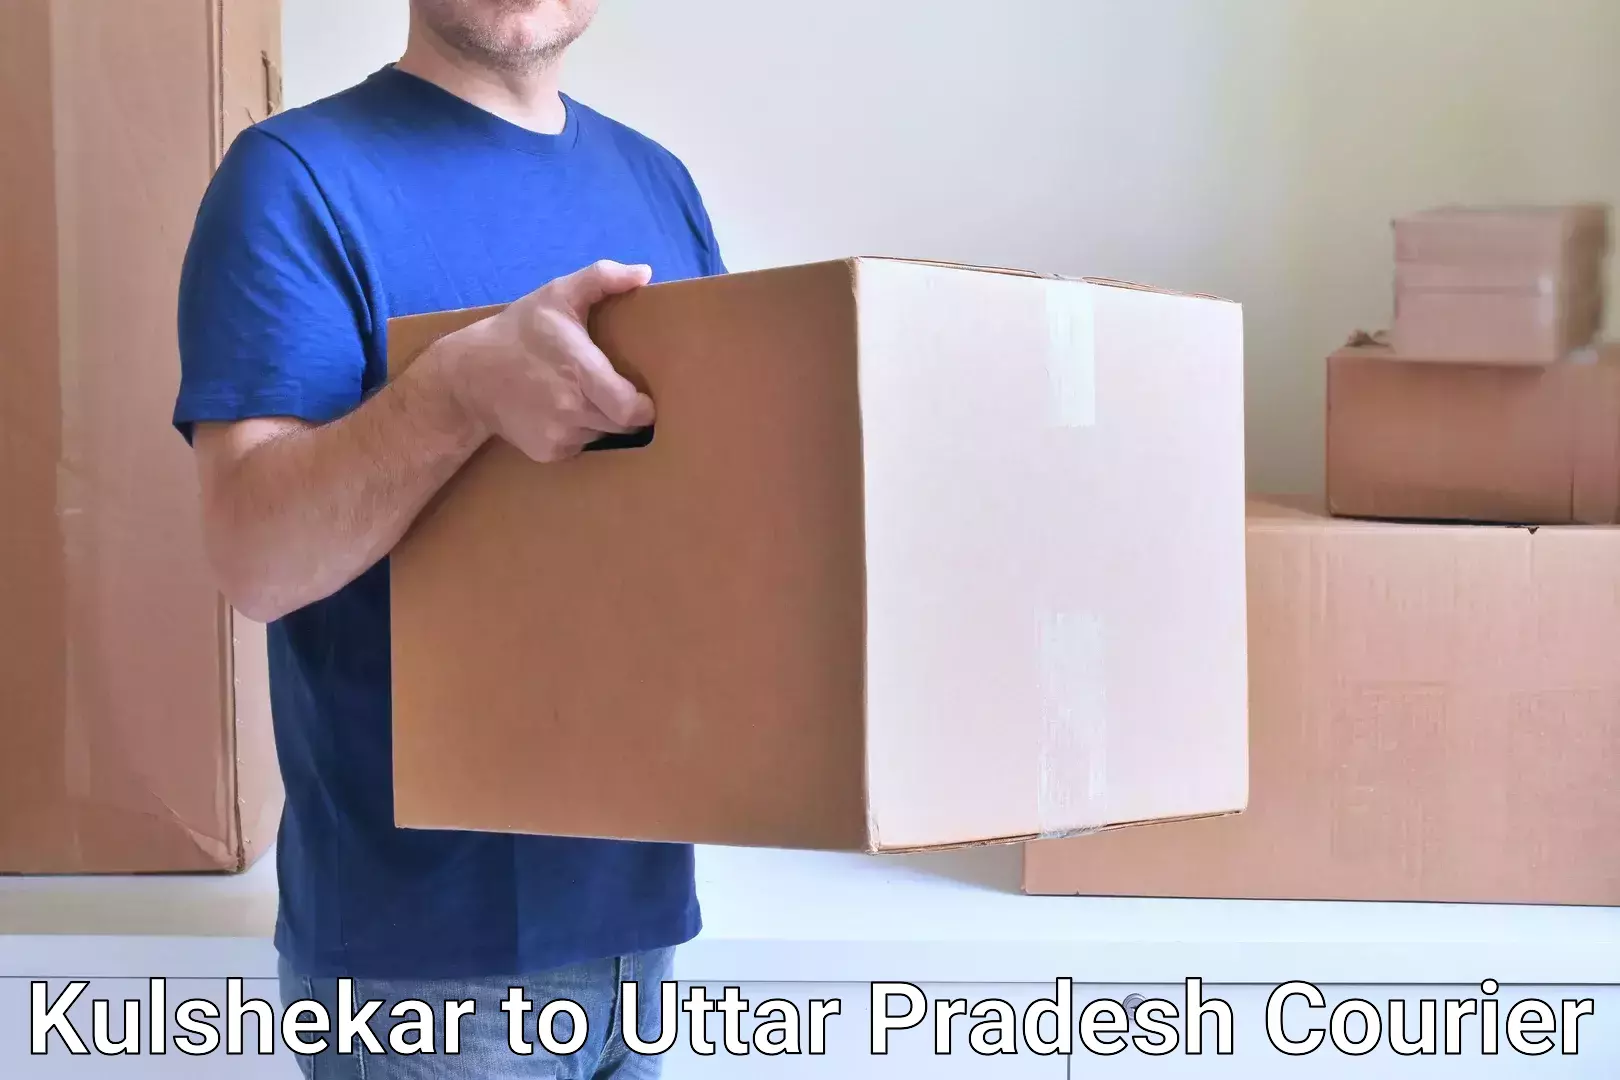 Round-the-clock parcel delivery Kulshekar to Kerakat